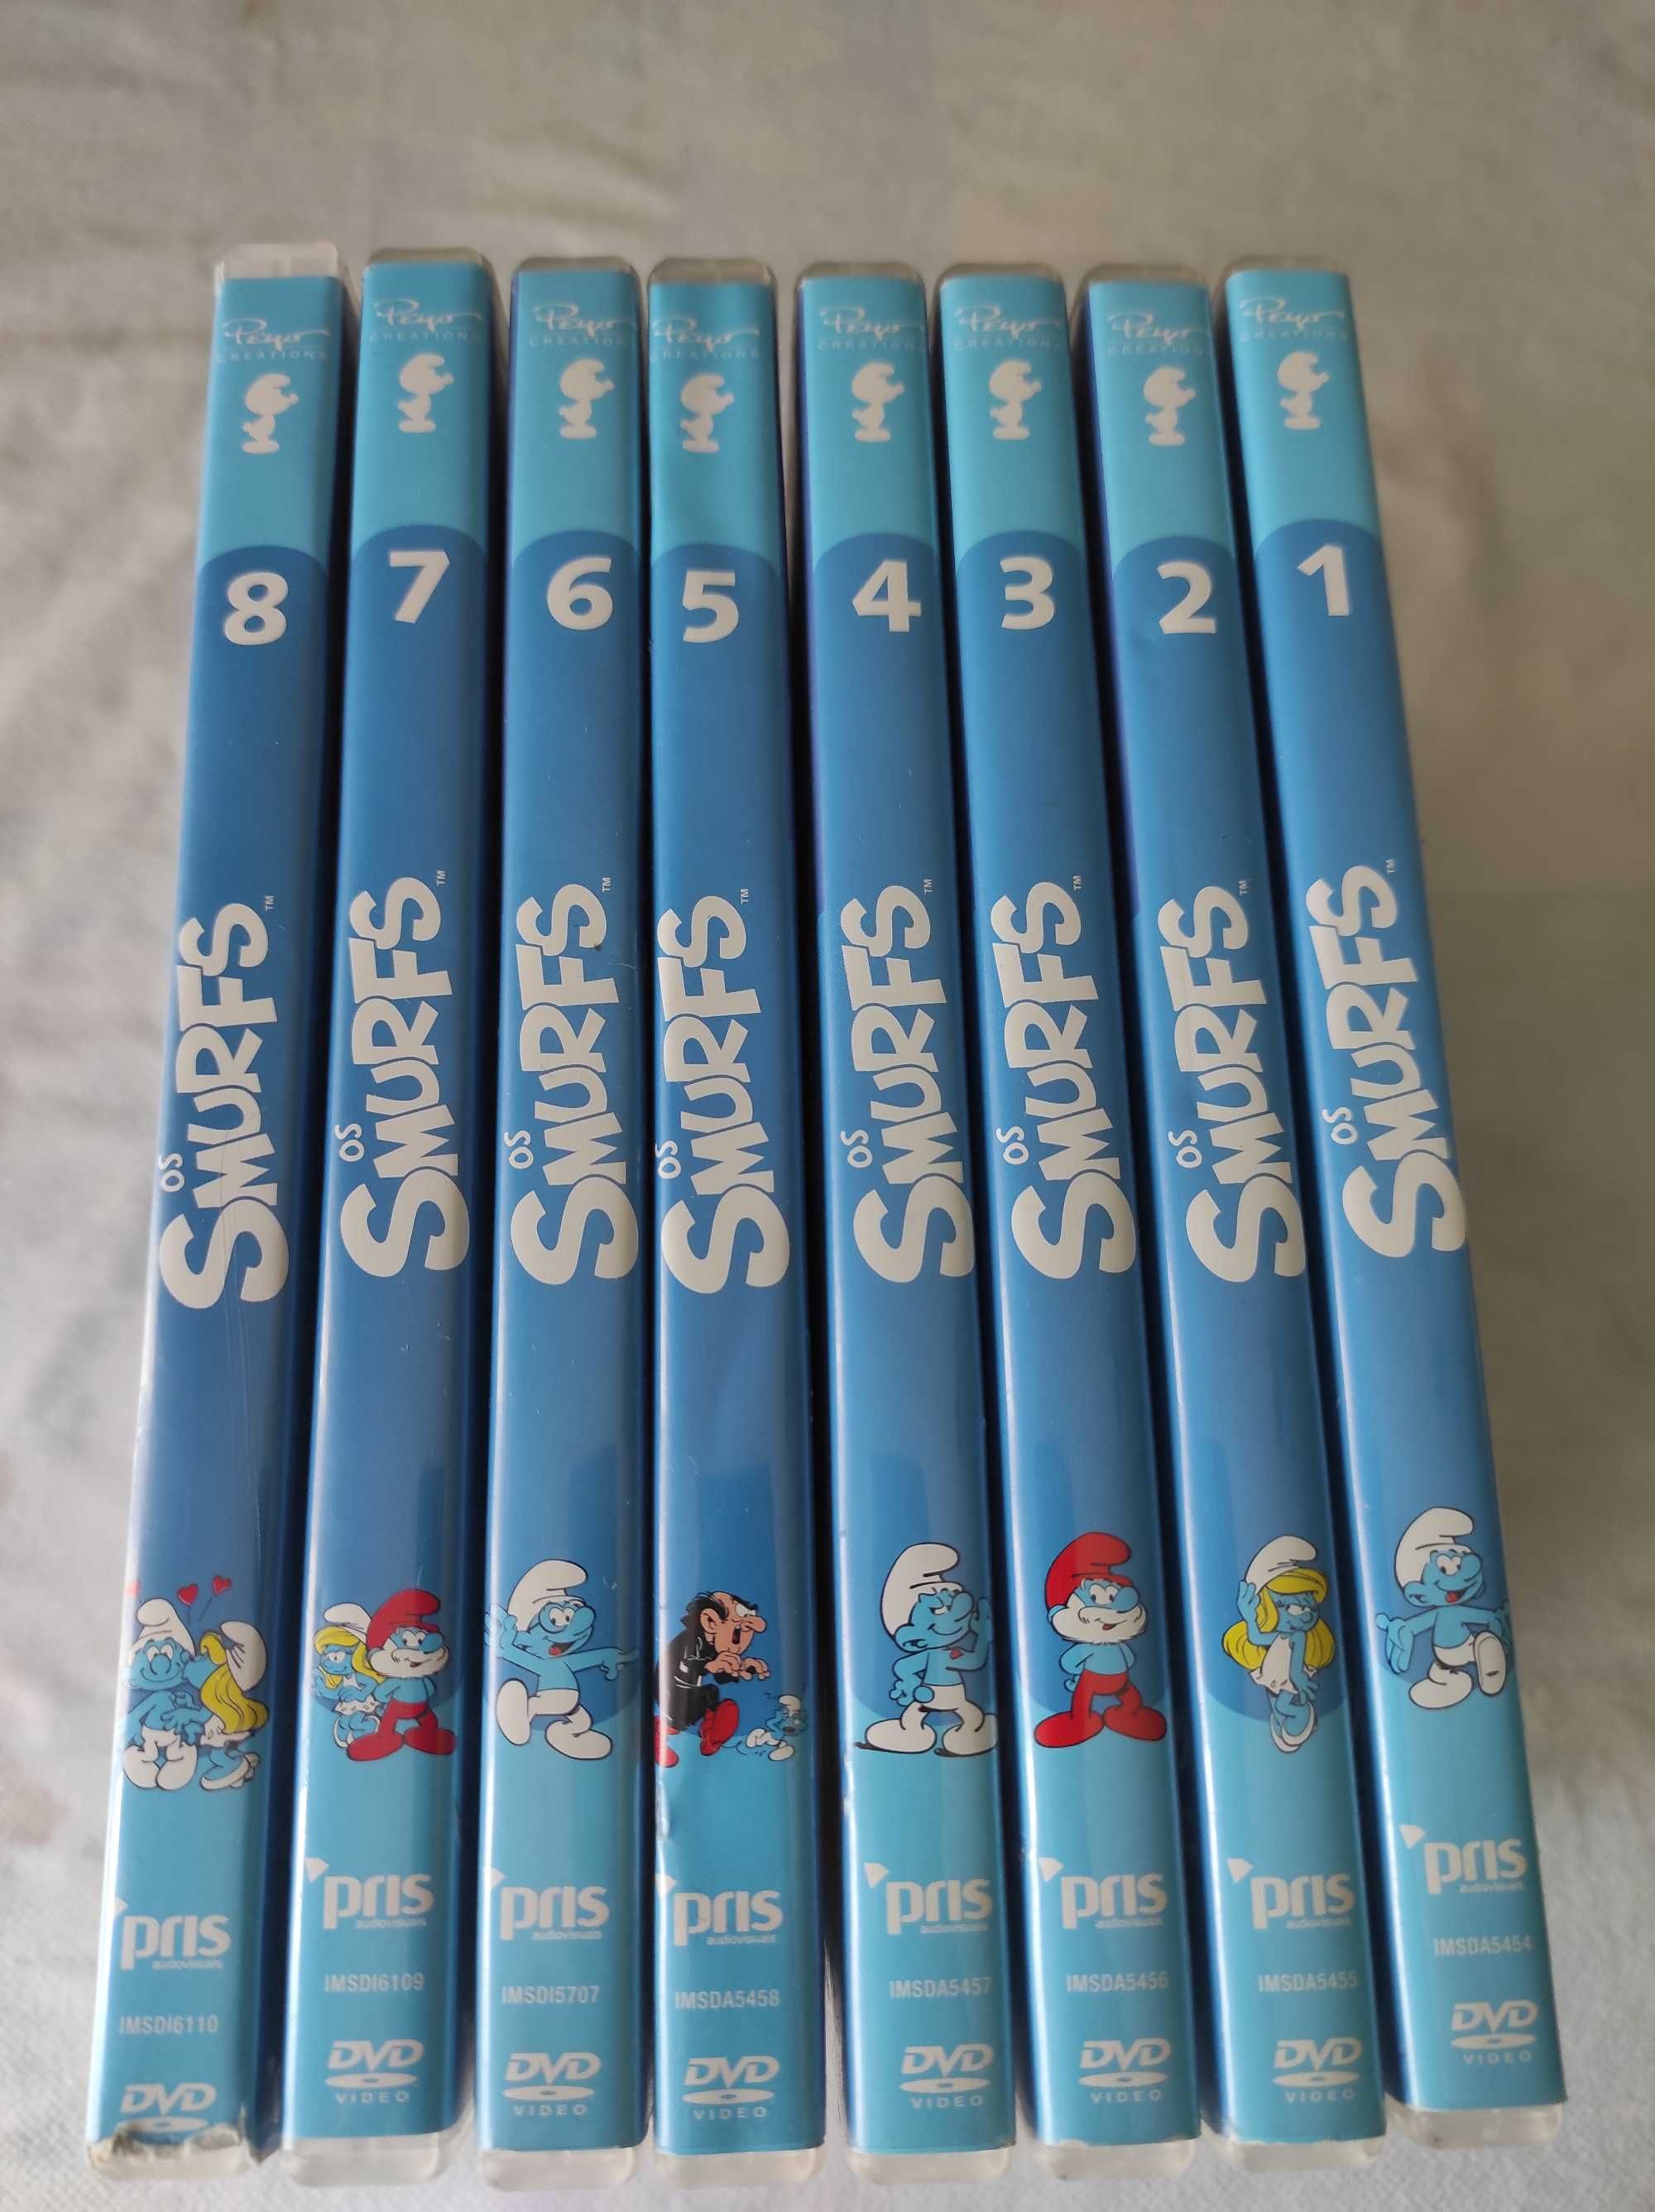 8 DVD dos Smurfs + Guru o mal disposto